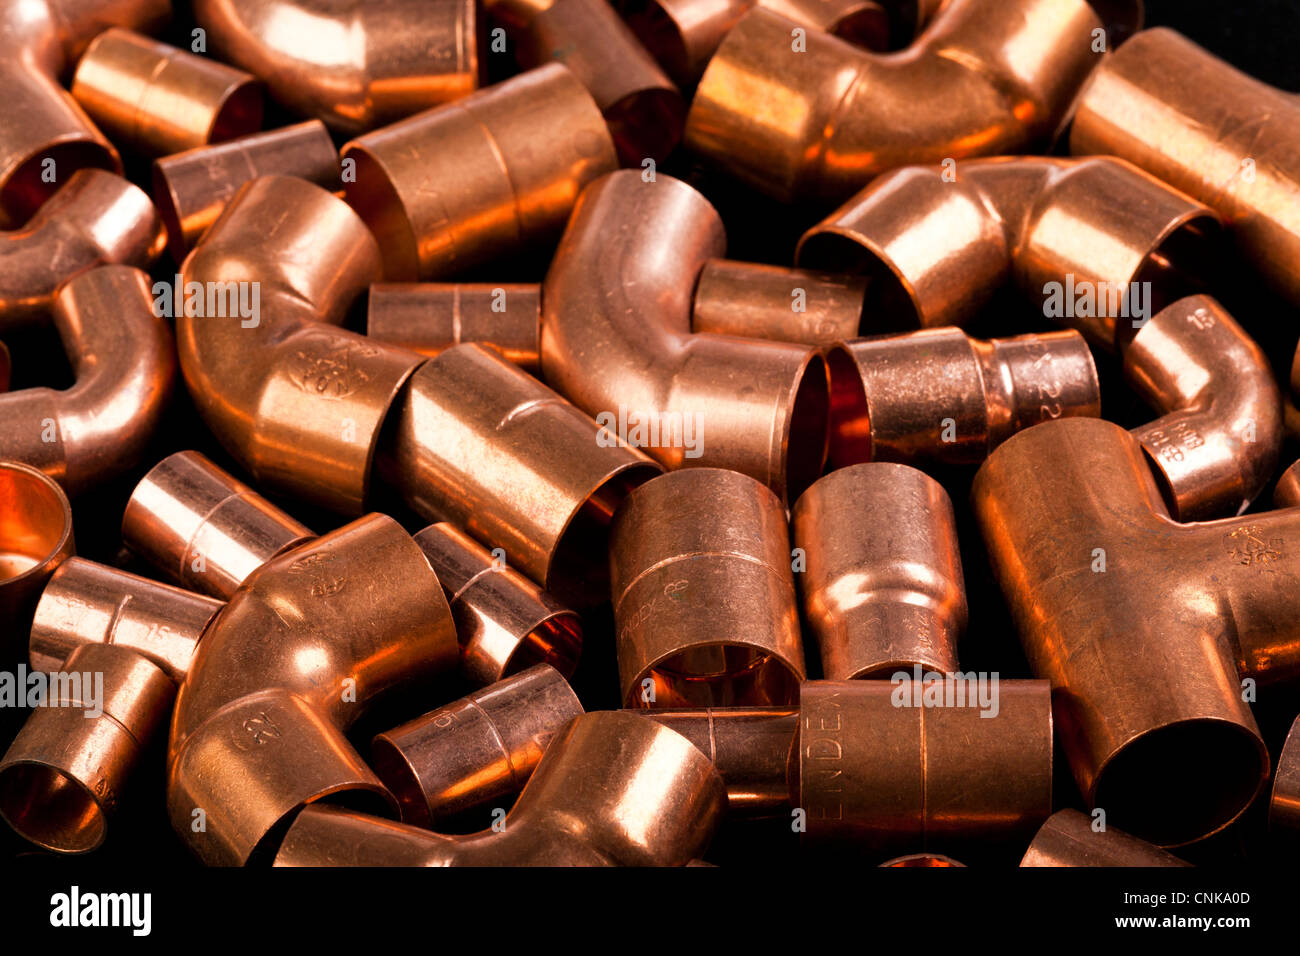 Kupfer-Metall Rohrverbinder / Armaturen Stockfoto